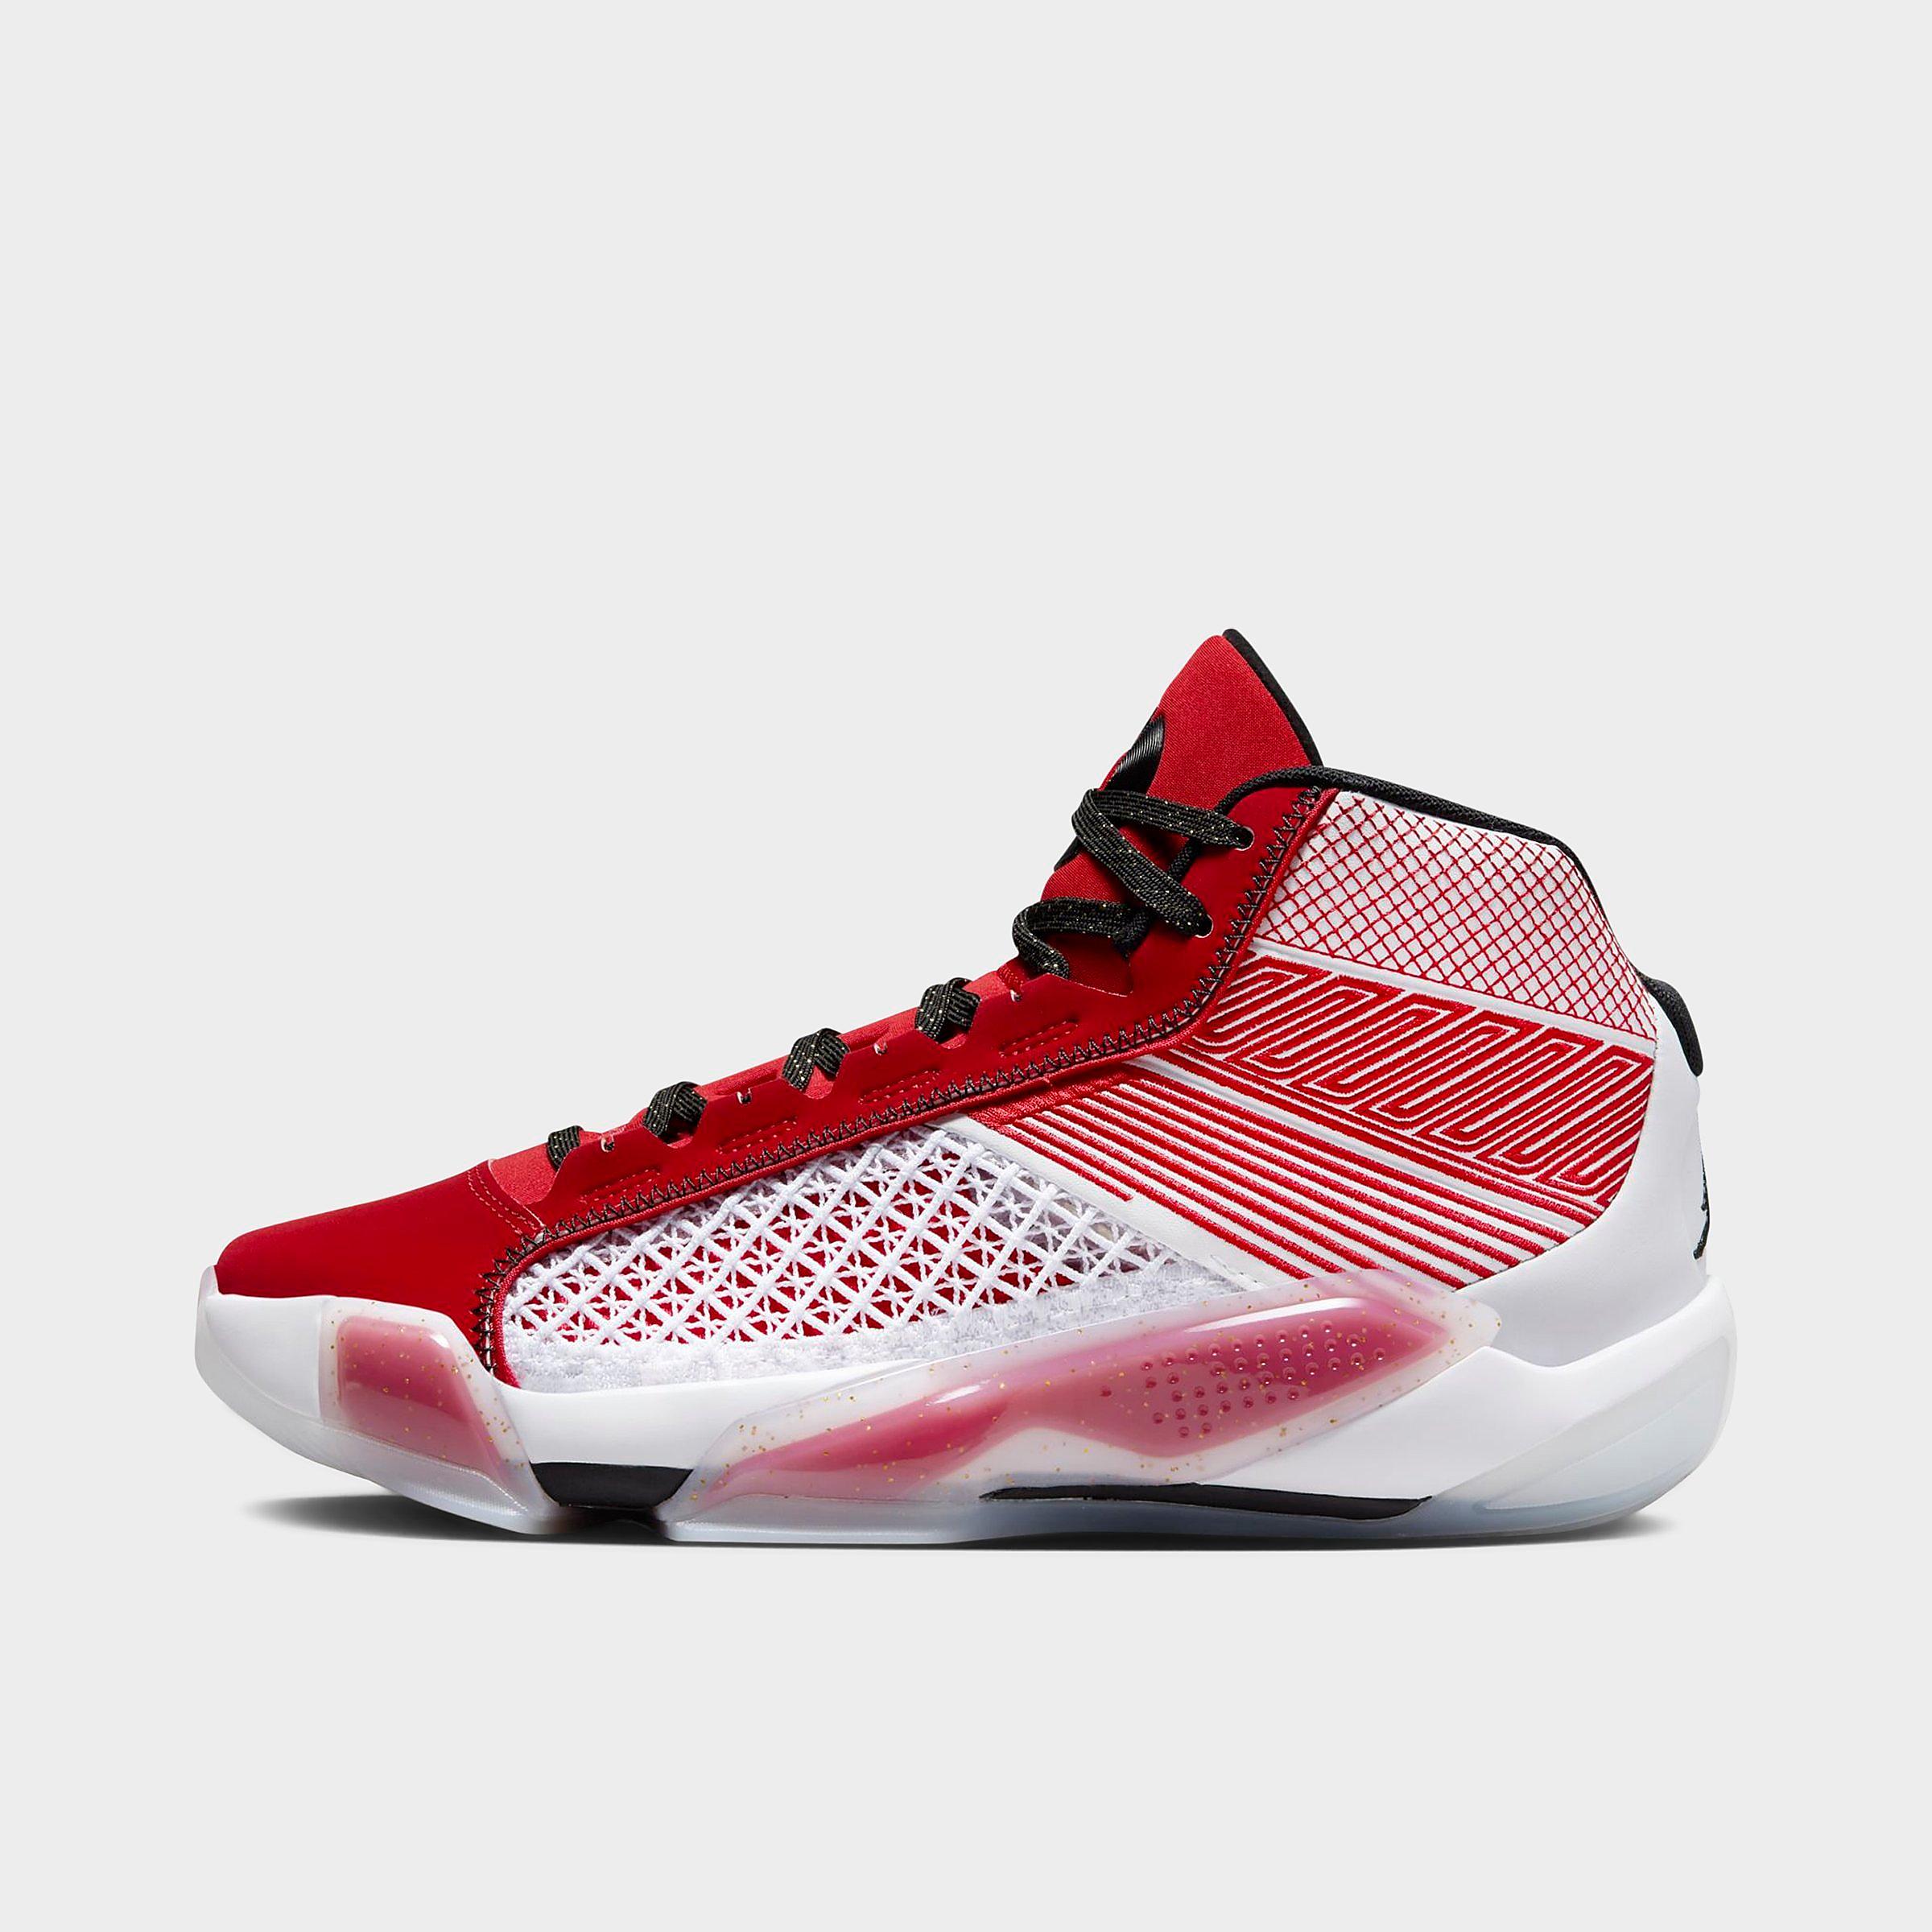 Air Jordan 38 Basketball Shoes